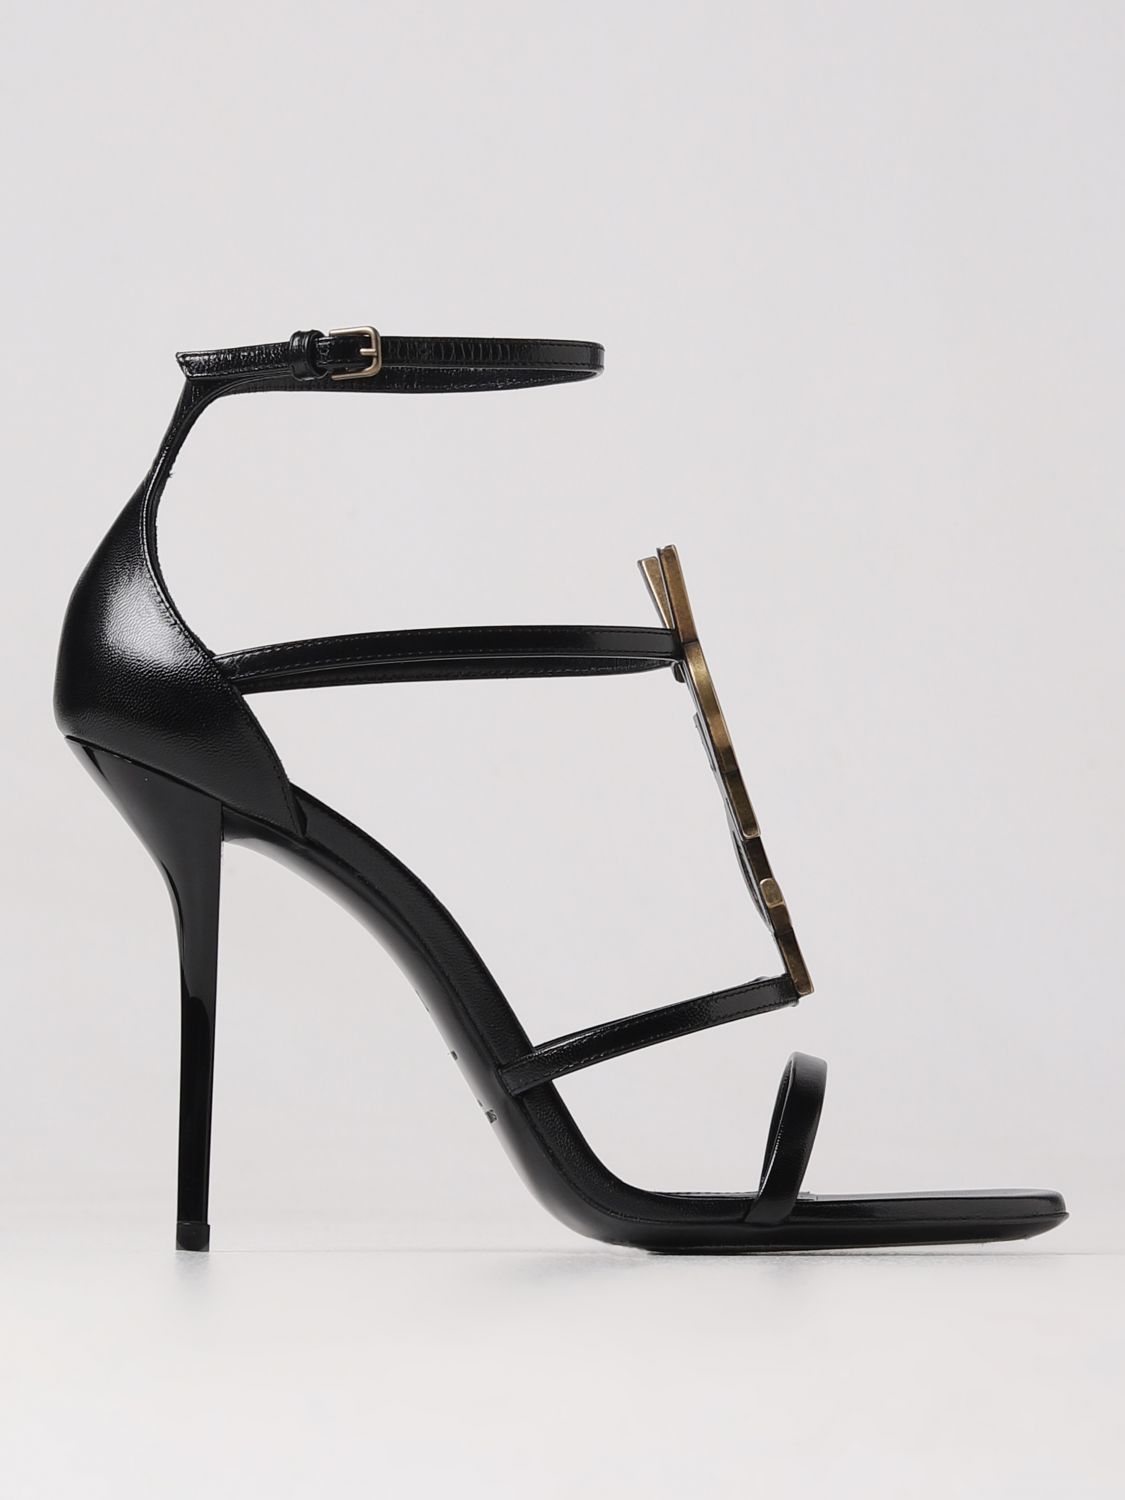 Cassandra Saint Laurent sandals in leather